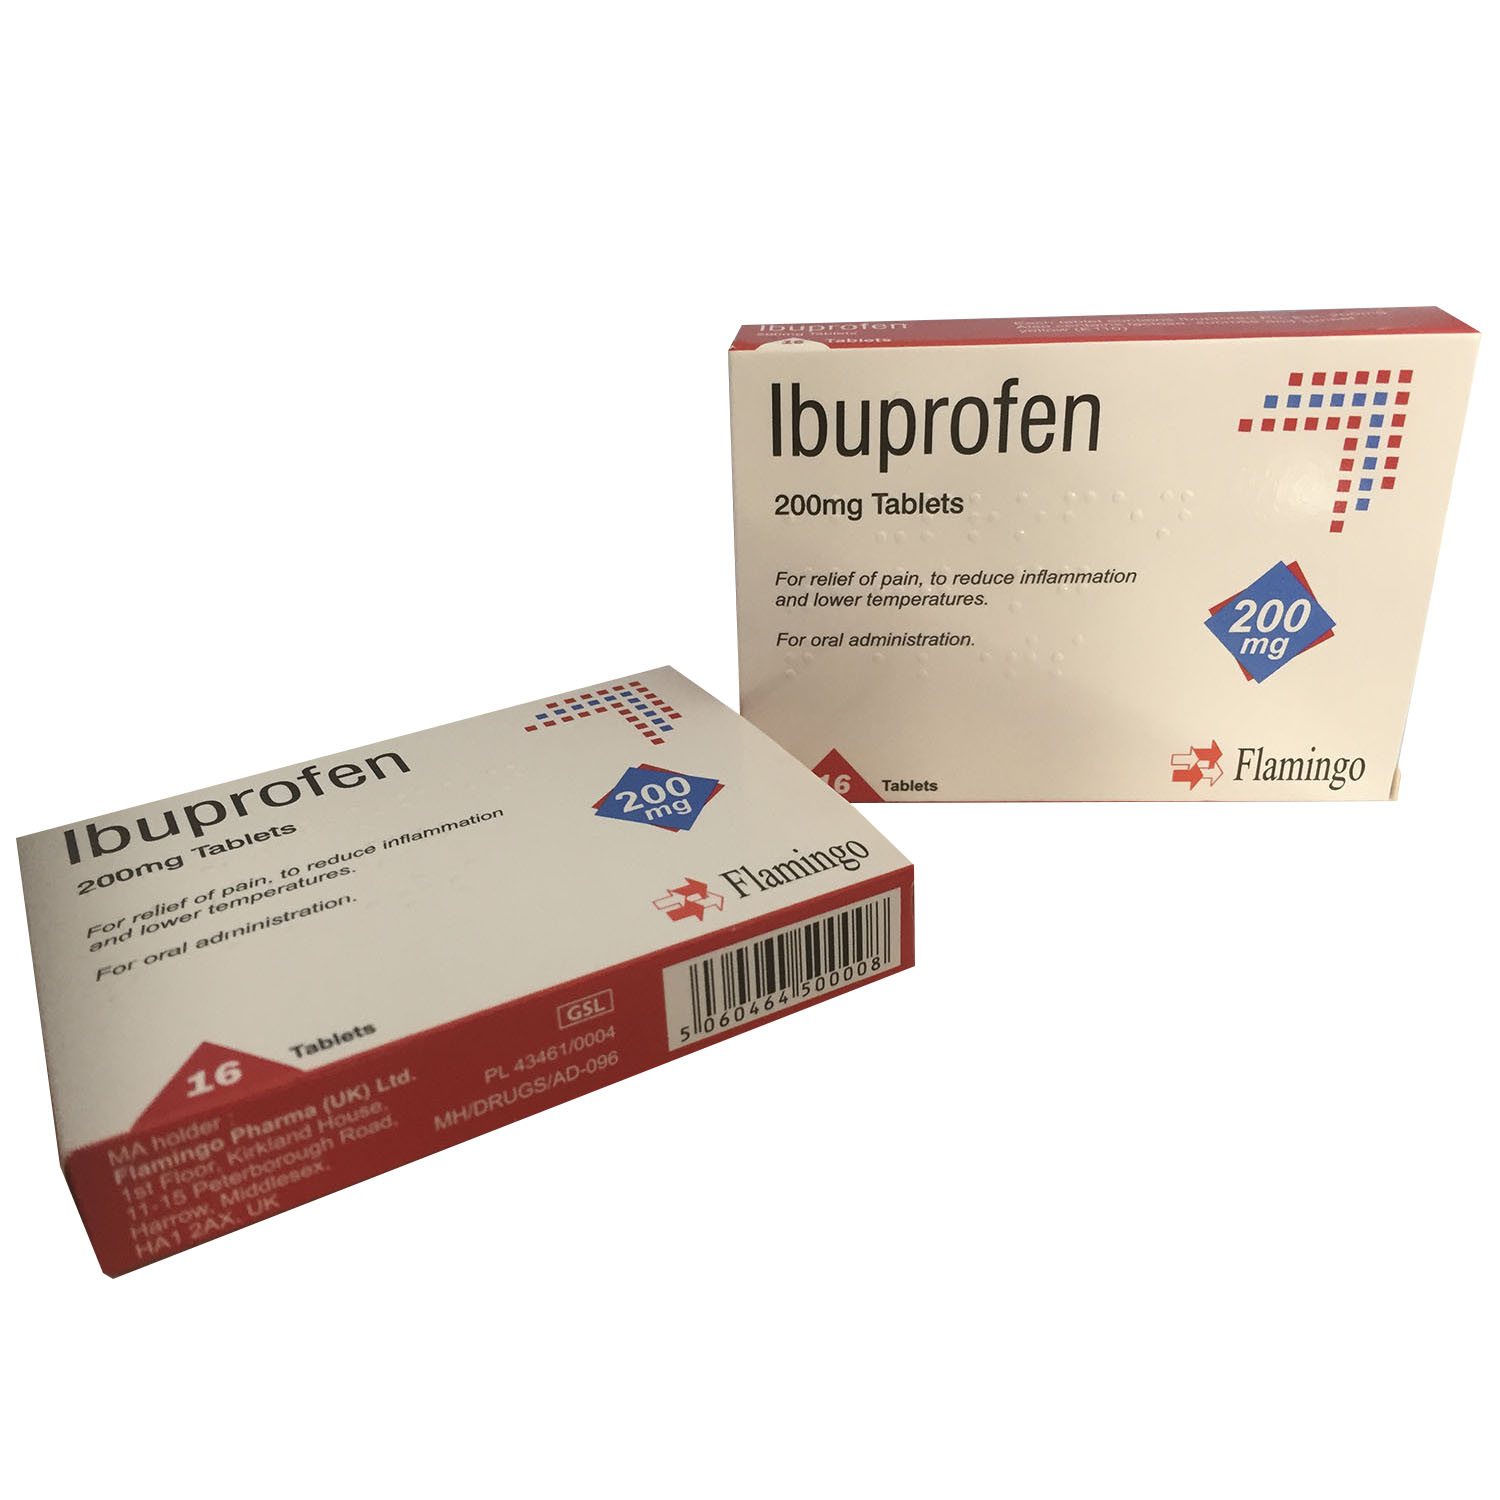 200mg Ibuprofen Tablets Image